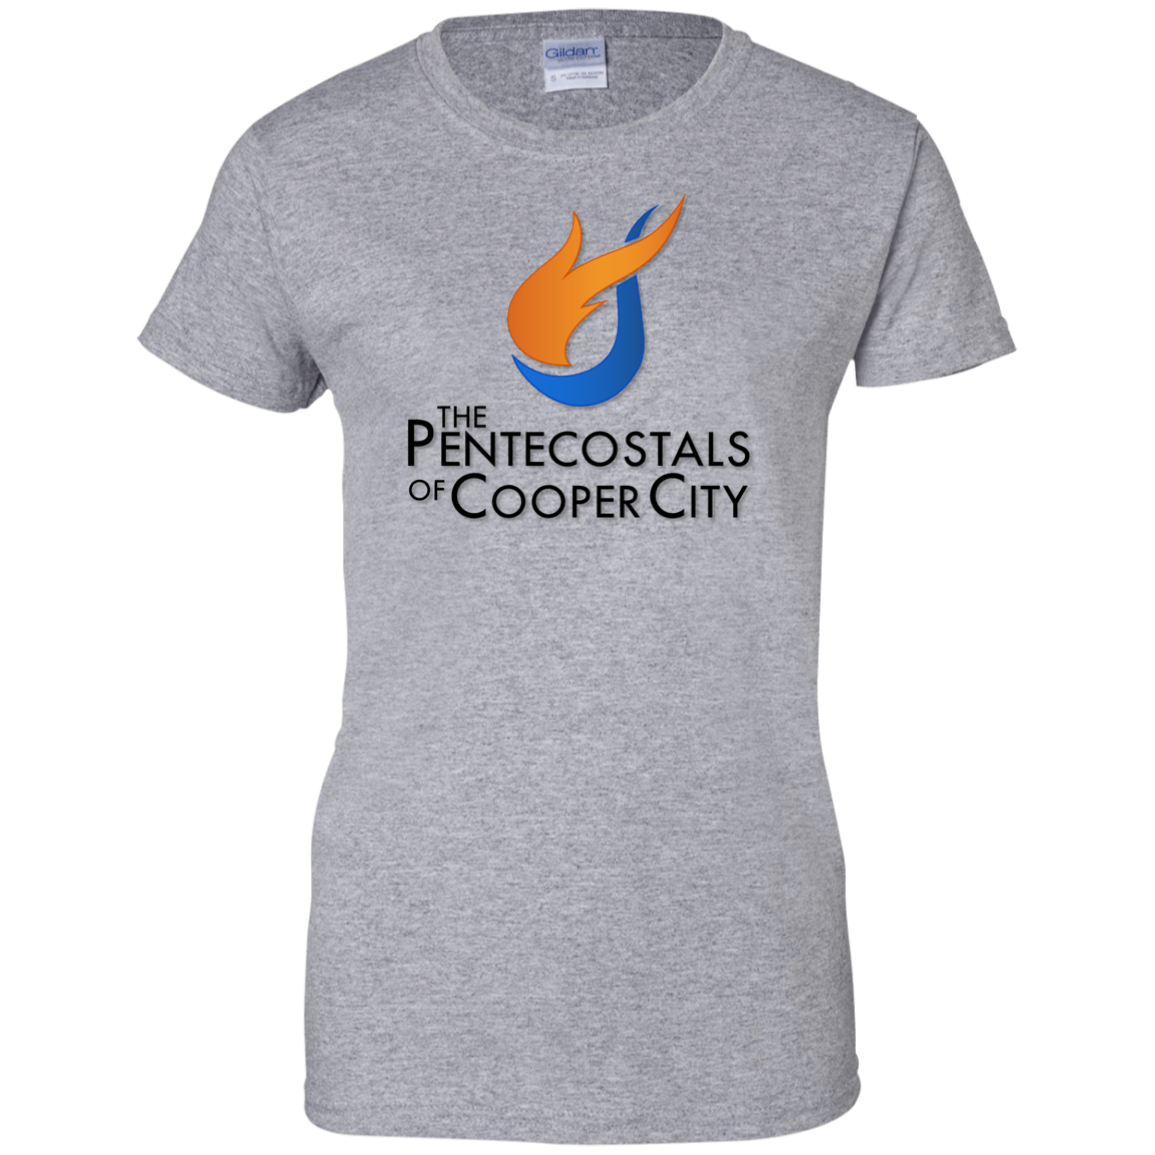 The Pentecostals of Cooper City - Ladies' 100% Cotton T-Shirt